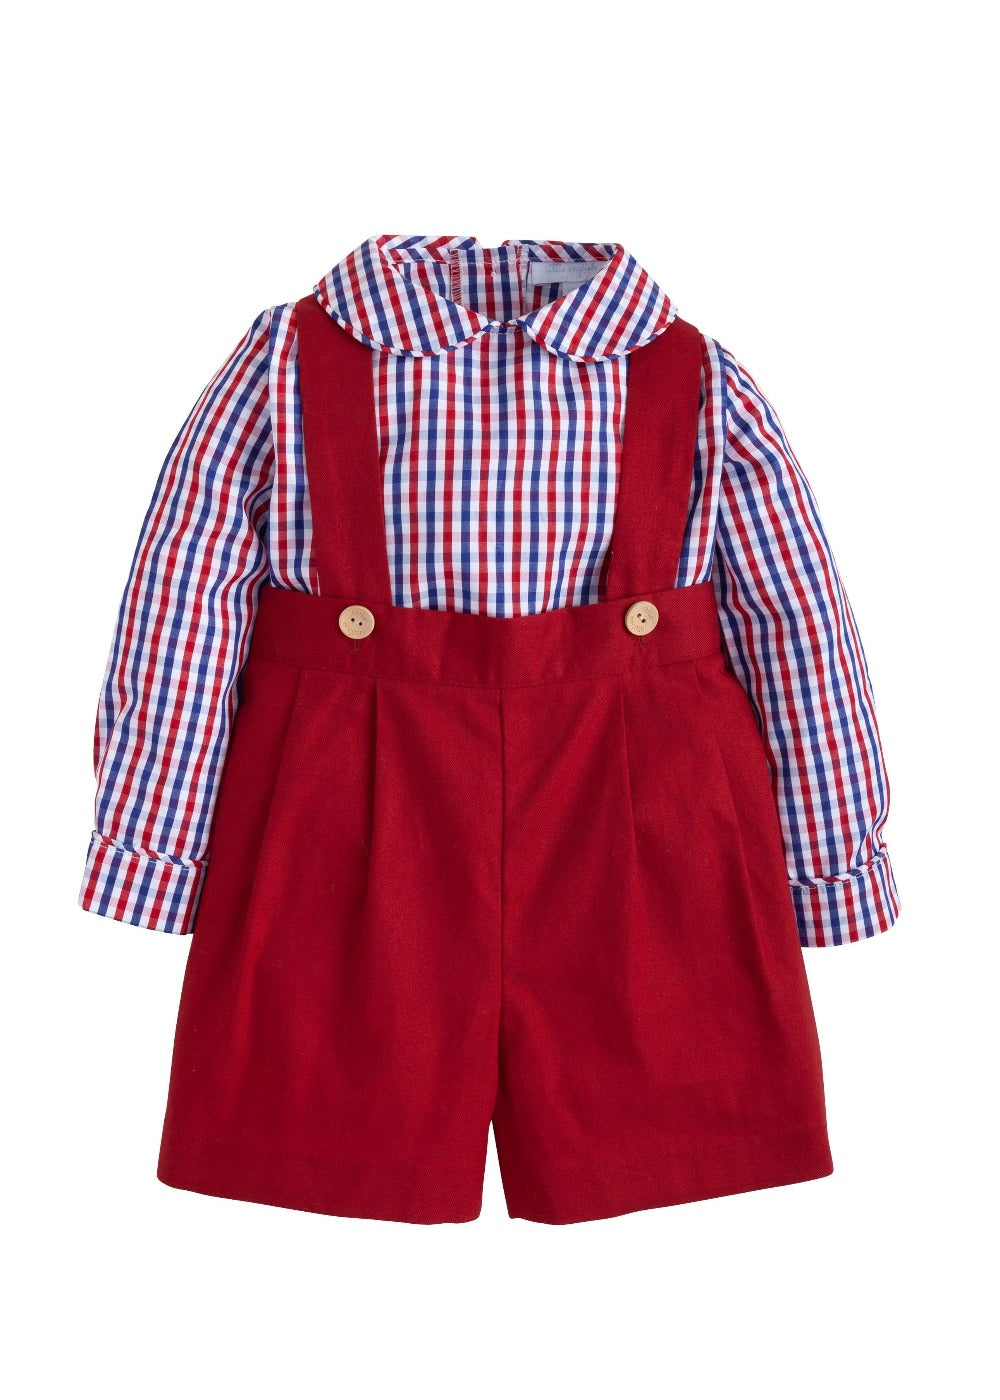 Elliot Shortall Set for boy, crimson plaid shirts and overalls for little boy